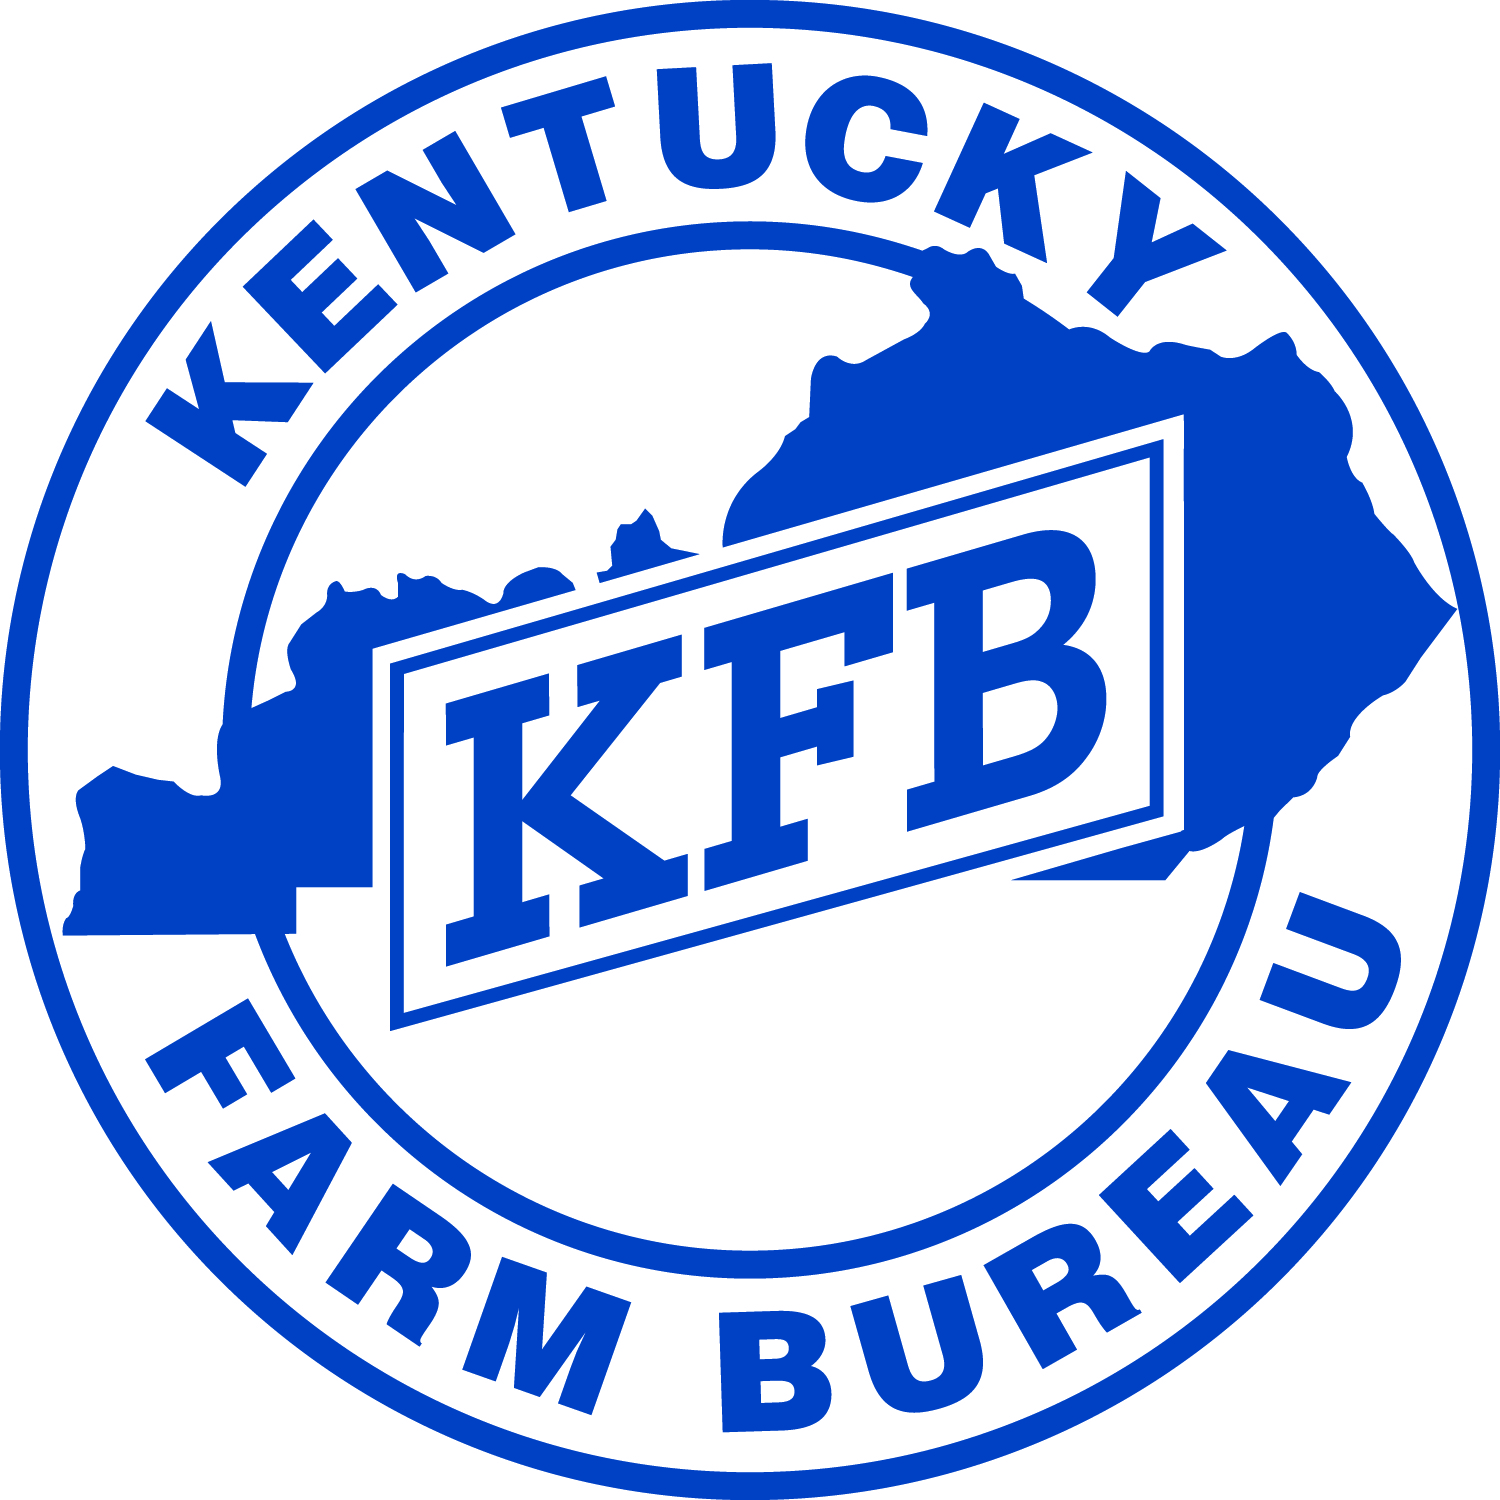 Kentucky Farm Bureau, the Voice of Kentucky Agriculture - Kentucky Farm